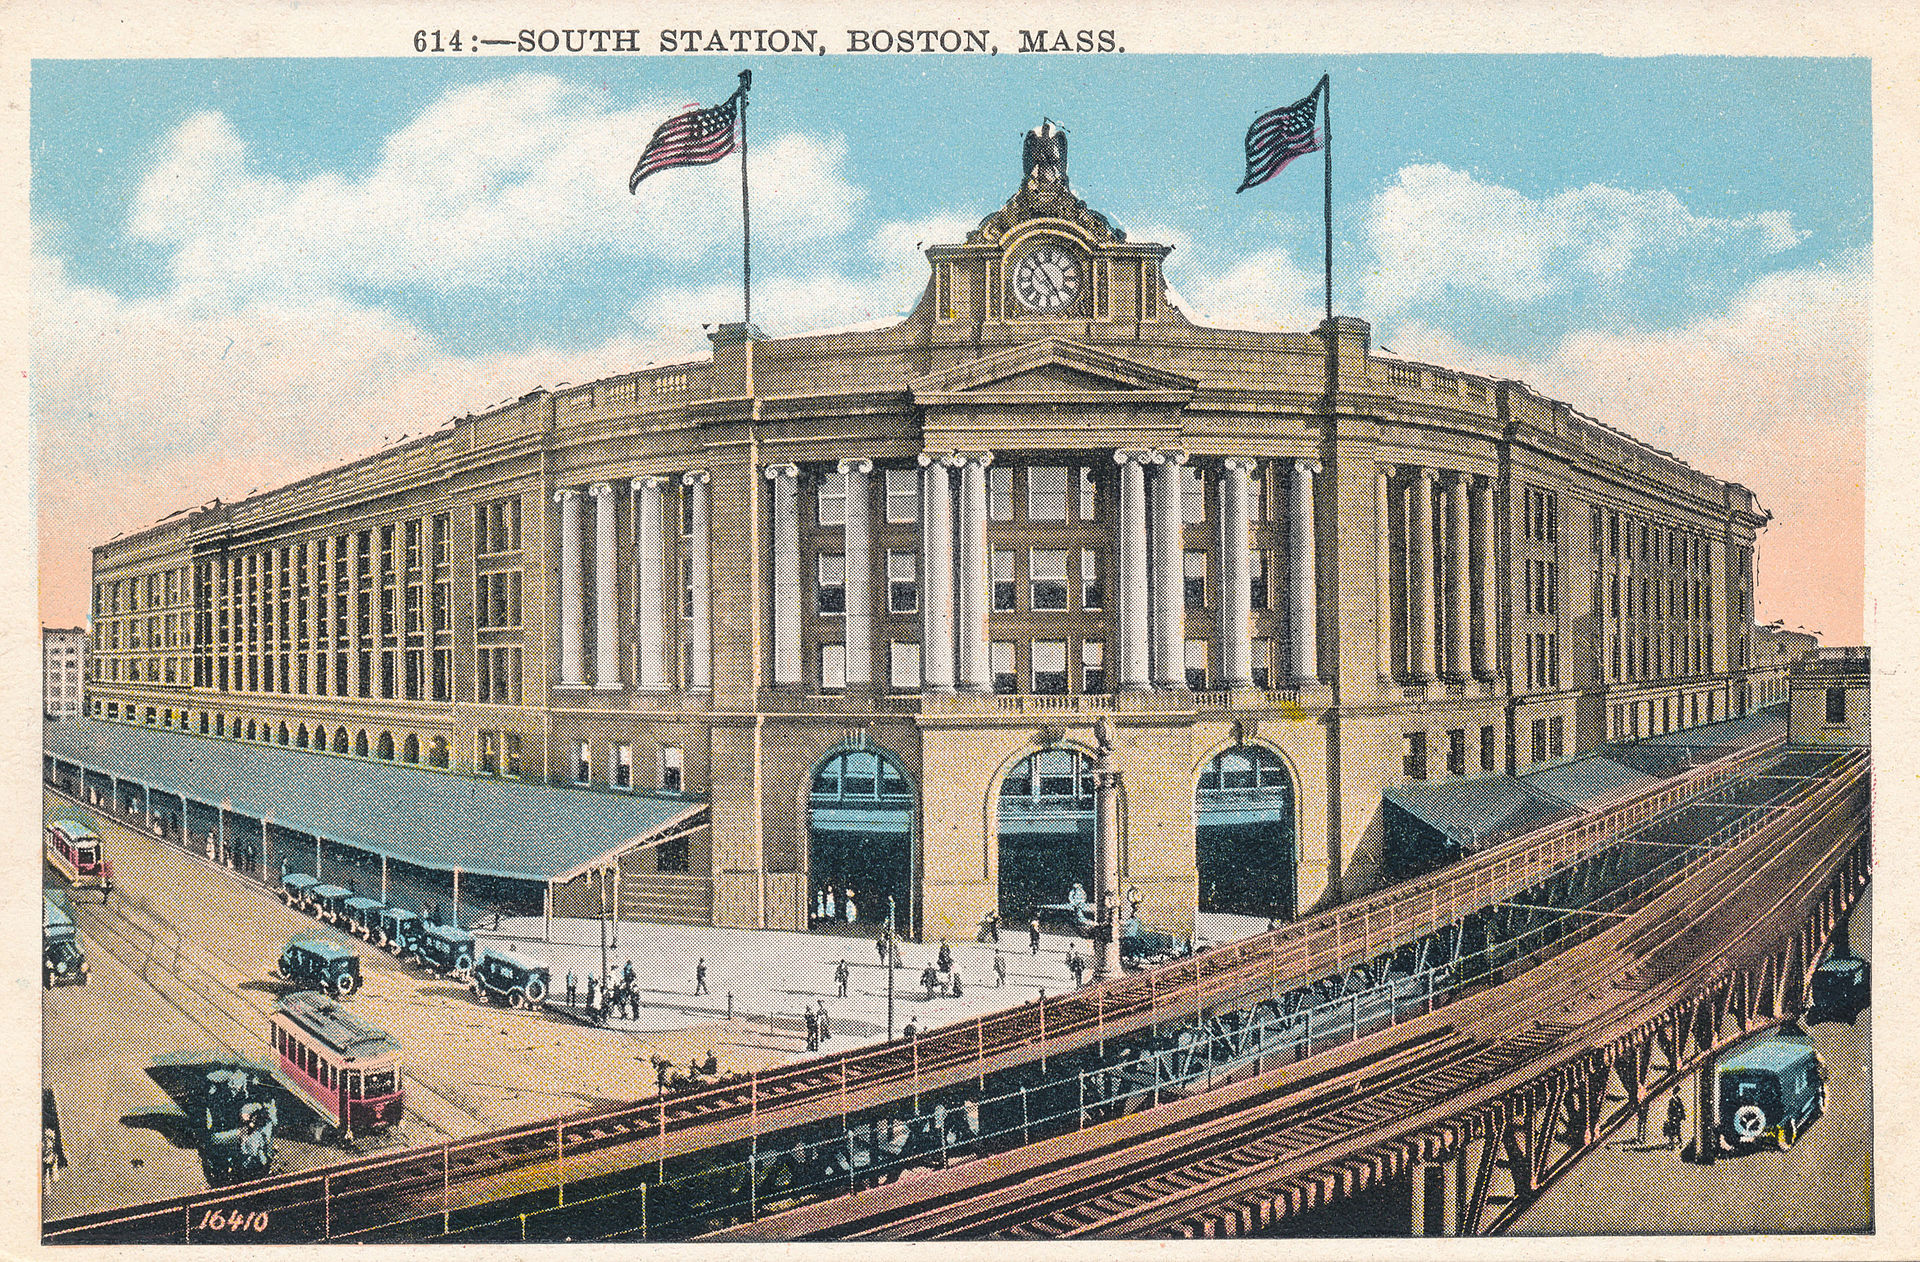 1920px-614_-_South_Station%2C_Boston%2C_Mass.jpg